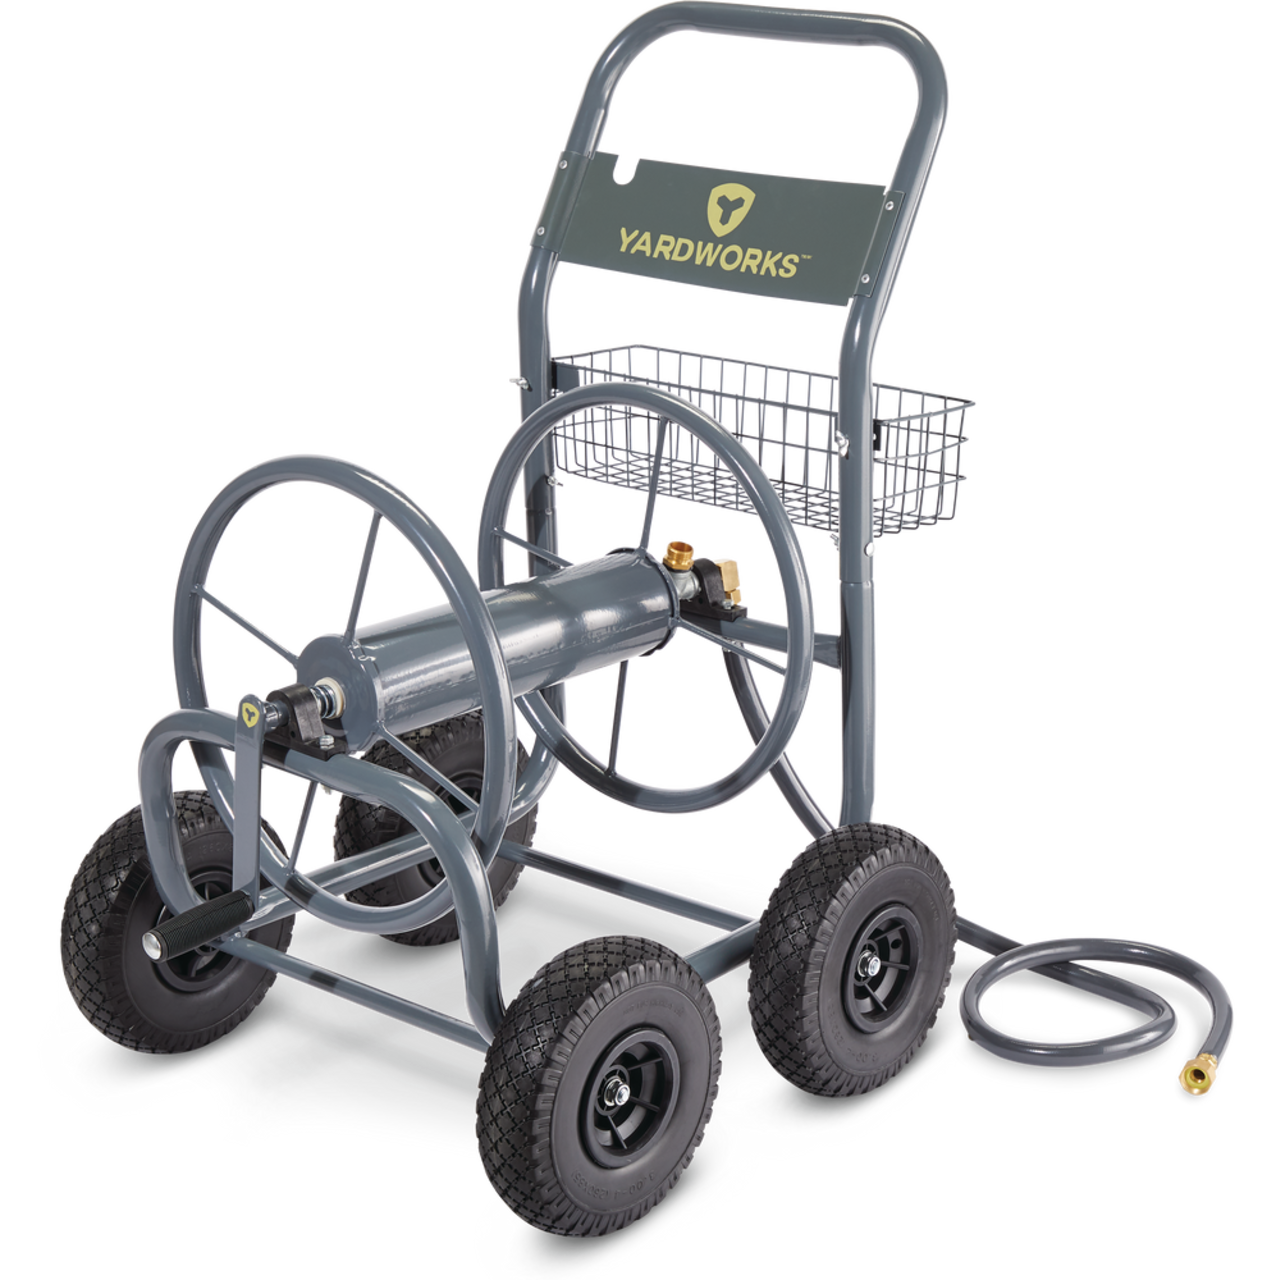 Yardworks 4-Wheel Rolling All Steel Garden Hose Reel Cart, 250-ft